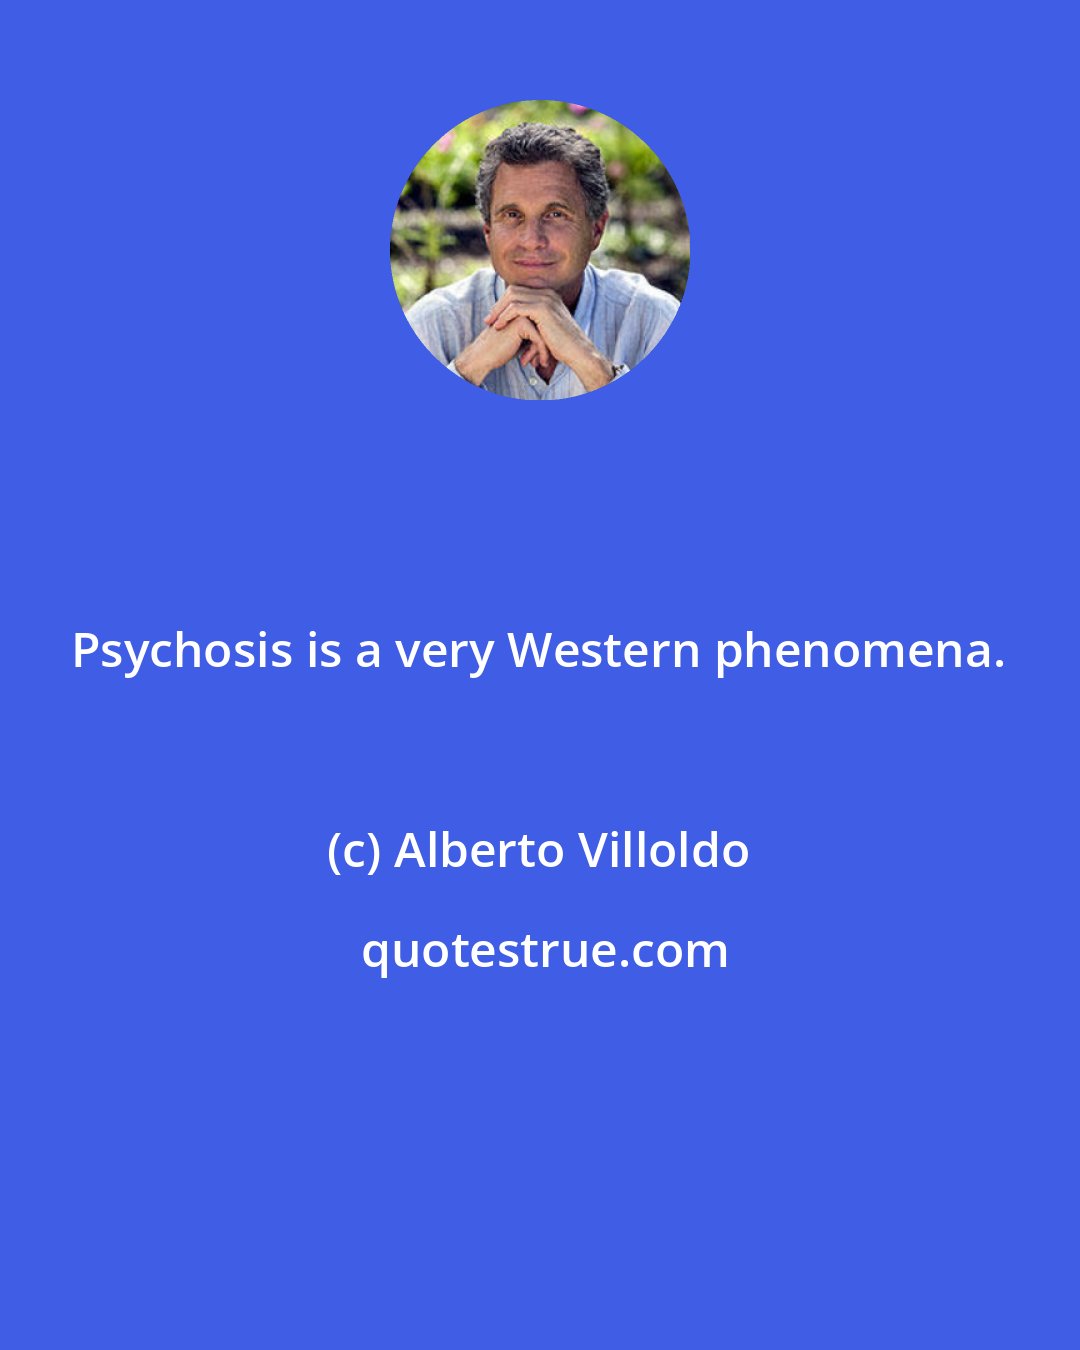 Alberto Villoldo: Psychosis is a very Western phenomena.